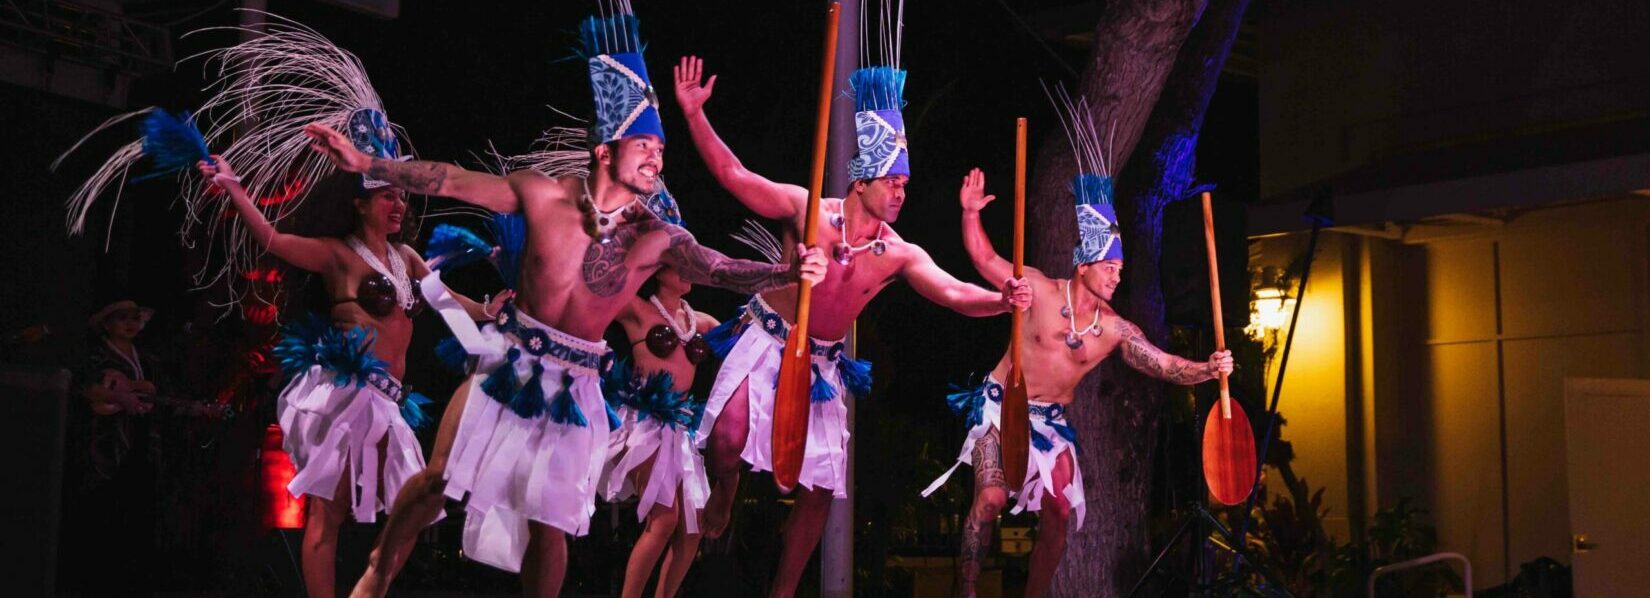 Cast members perform on stage at Ka Moana Luau at Aloha Tower in Honolulu.